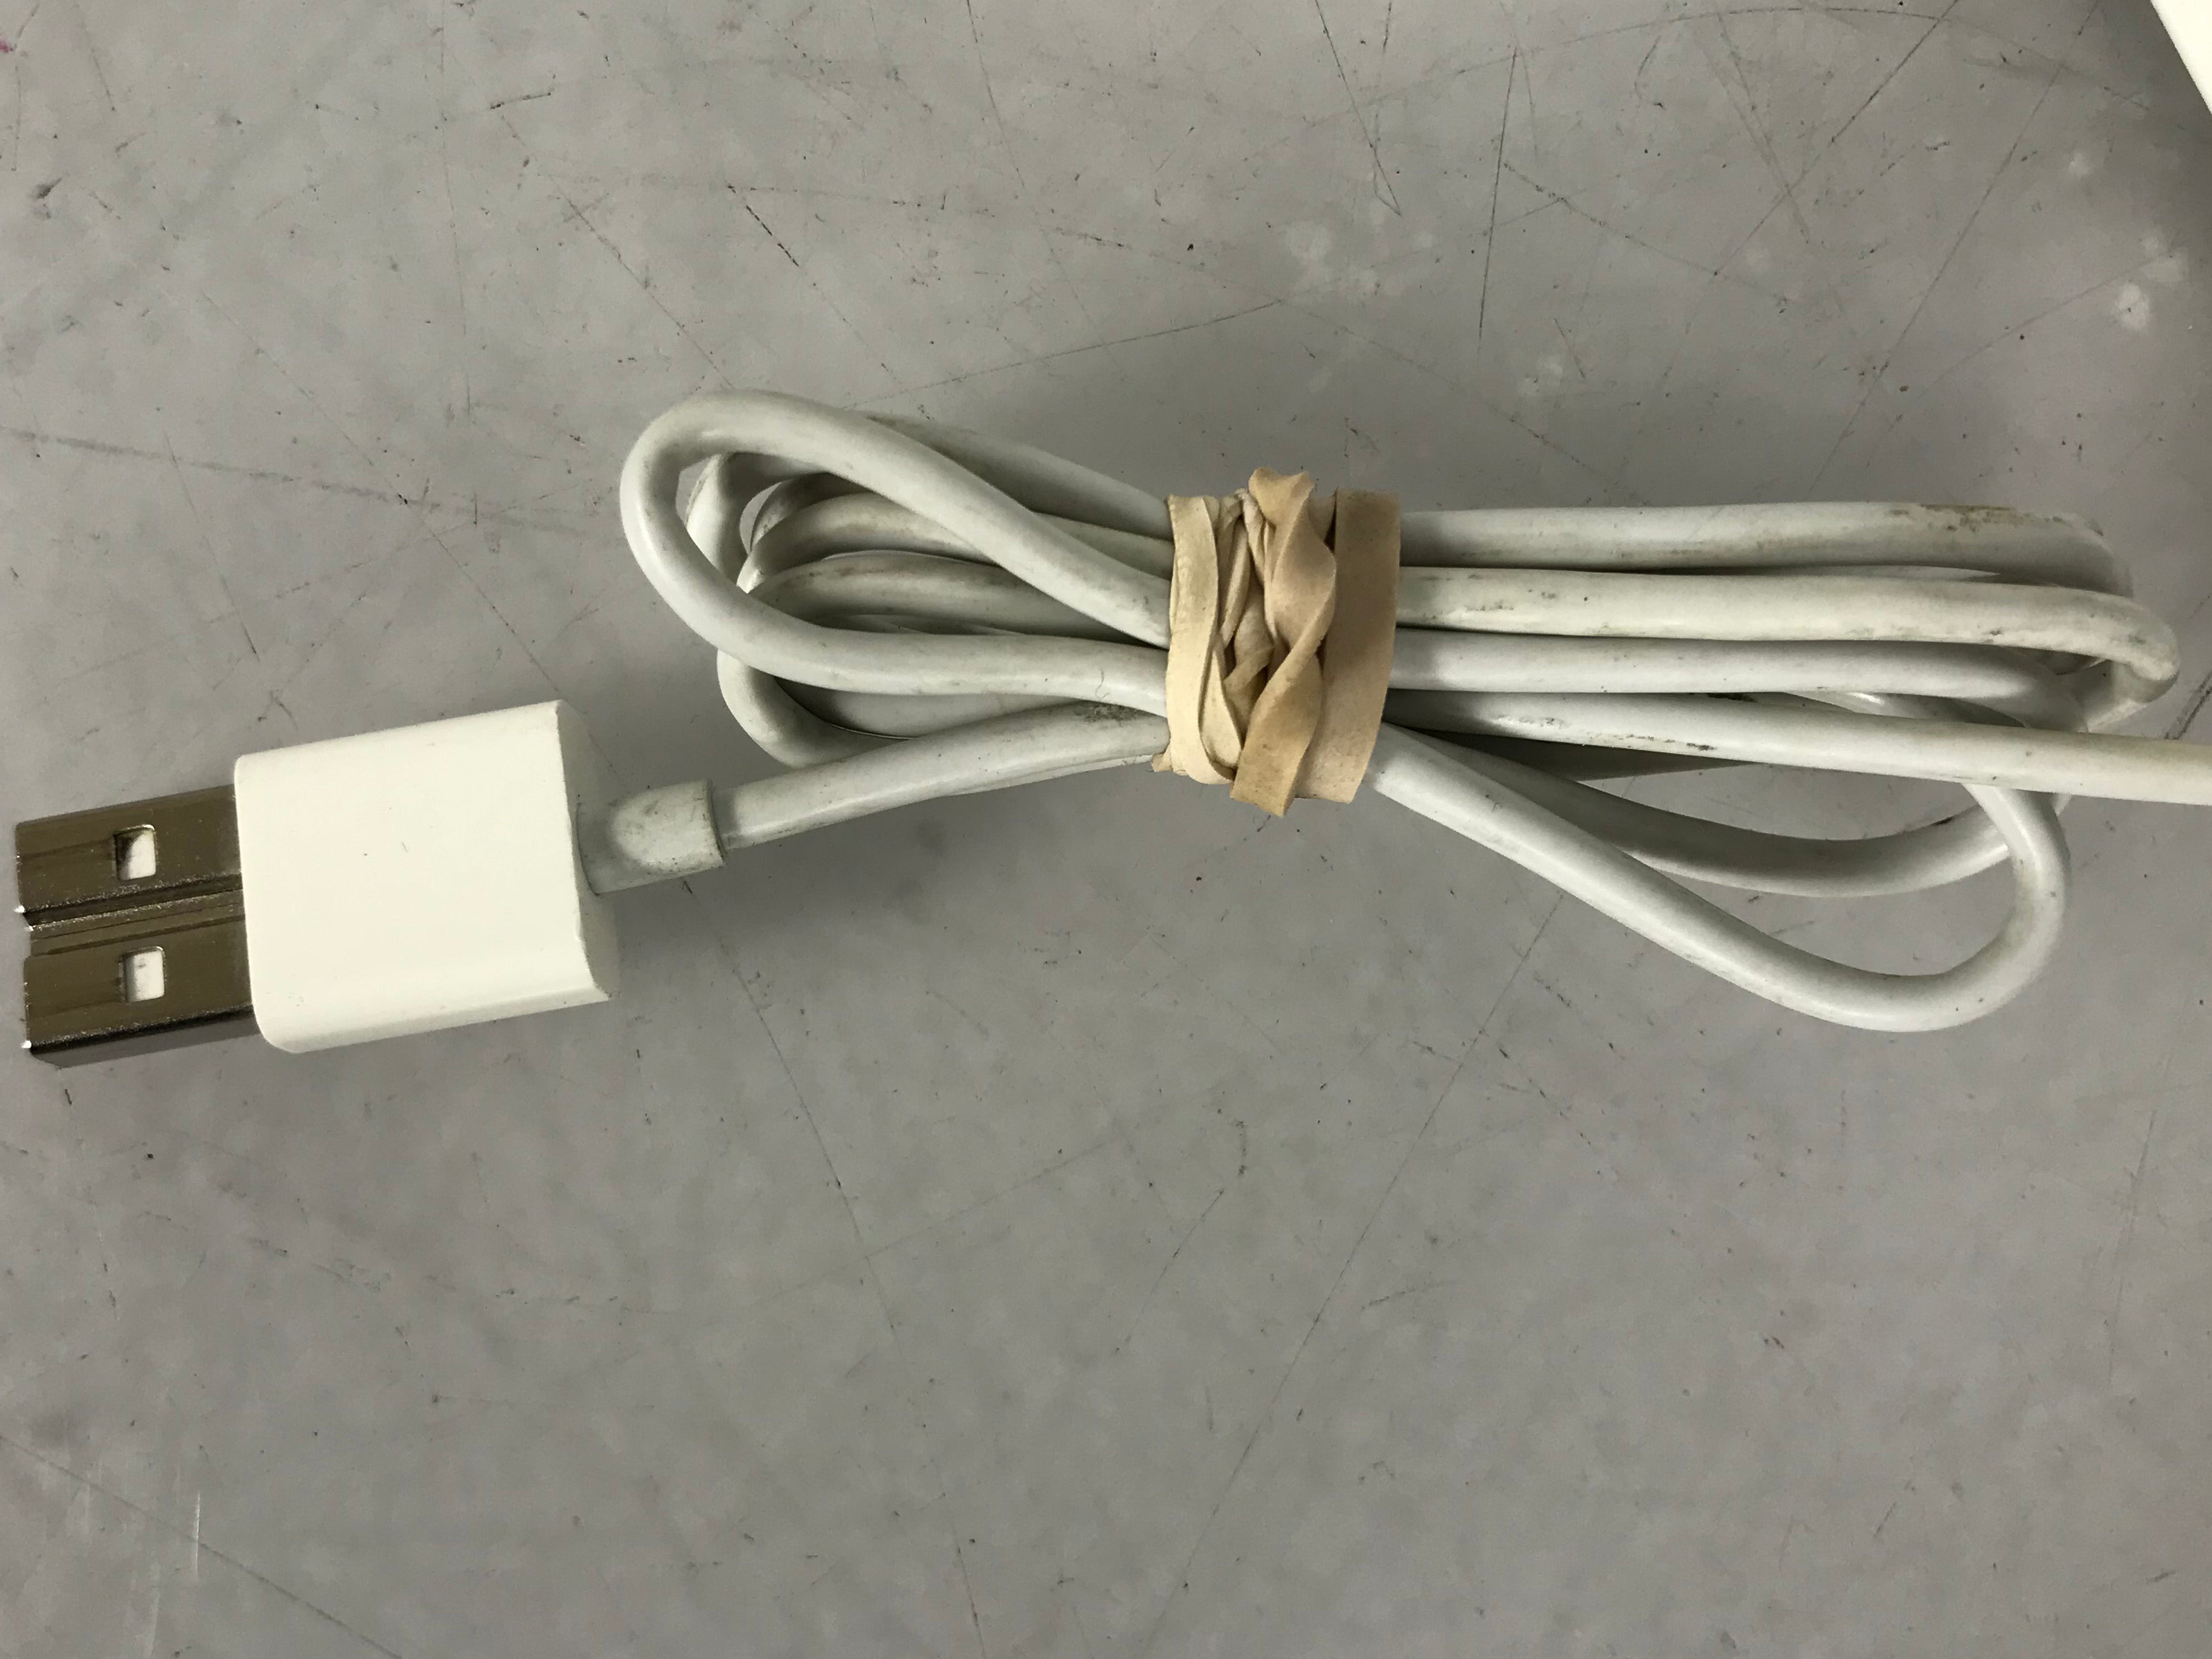 Apple A1243 Silver Wired USB Keyboard